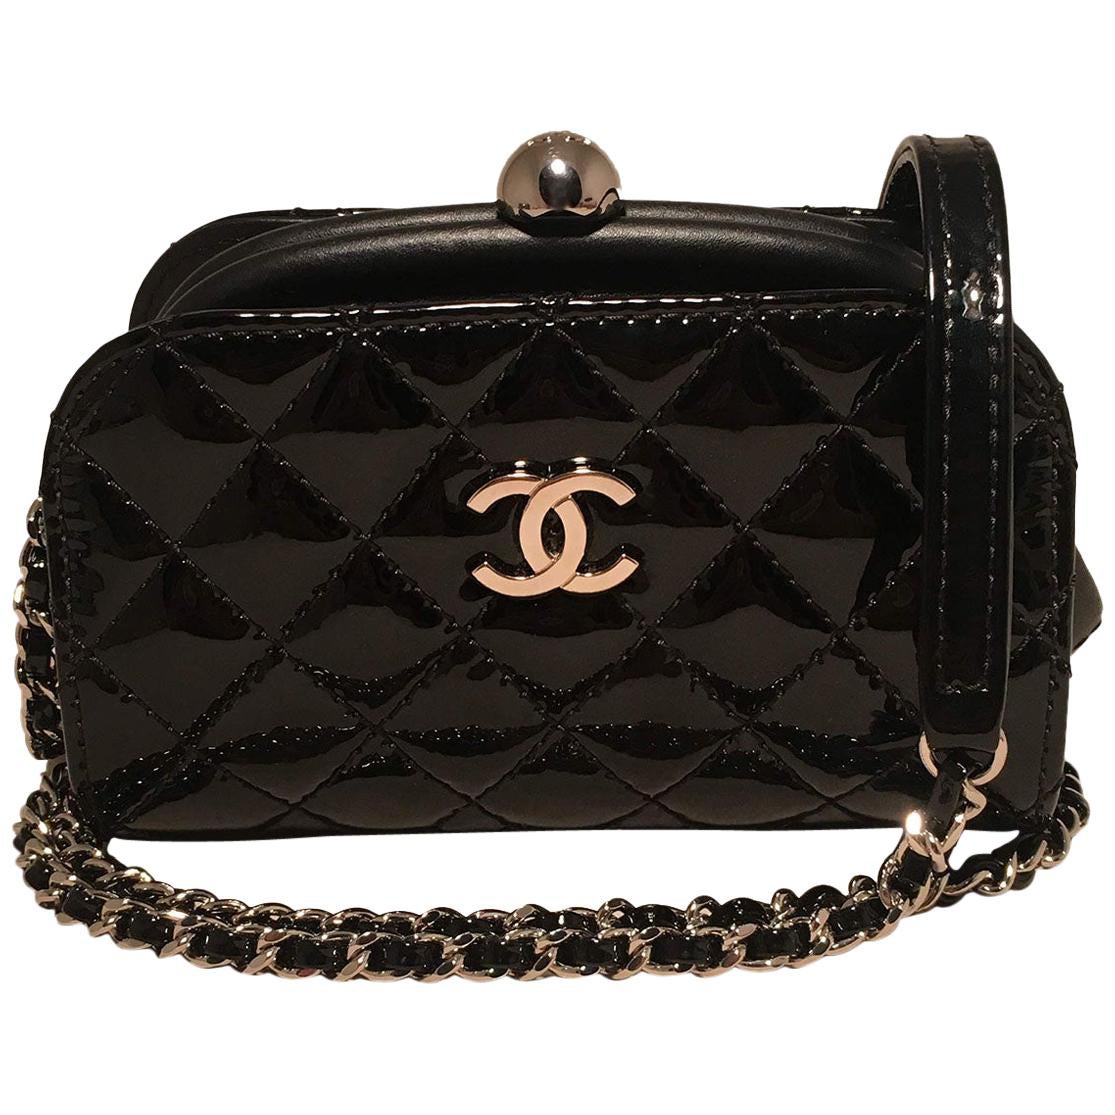 Chanel Vintage Mini Kiss Lock Crossbody Bag, $2,750